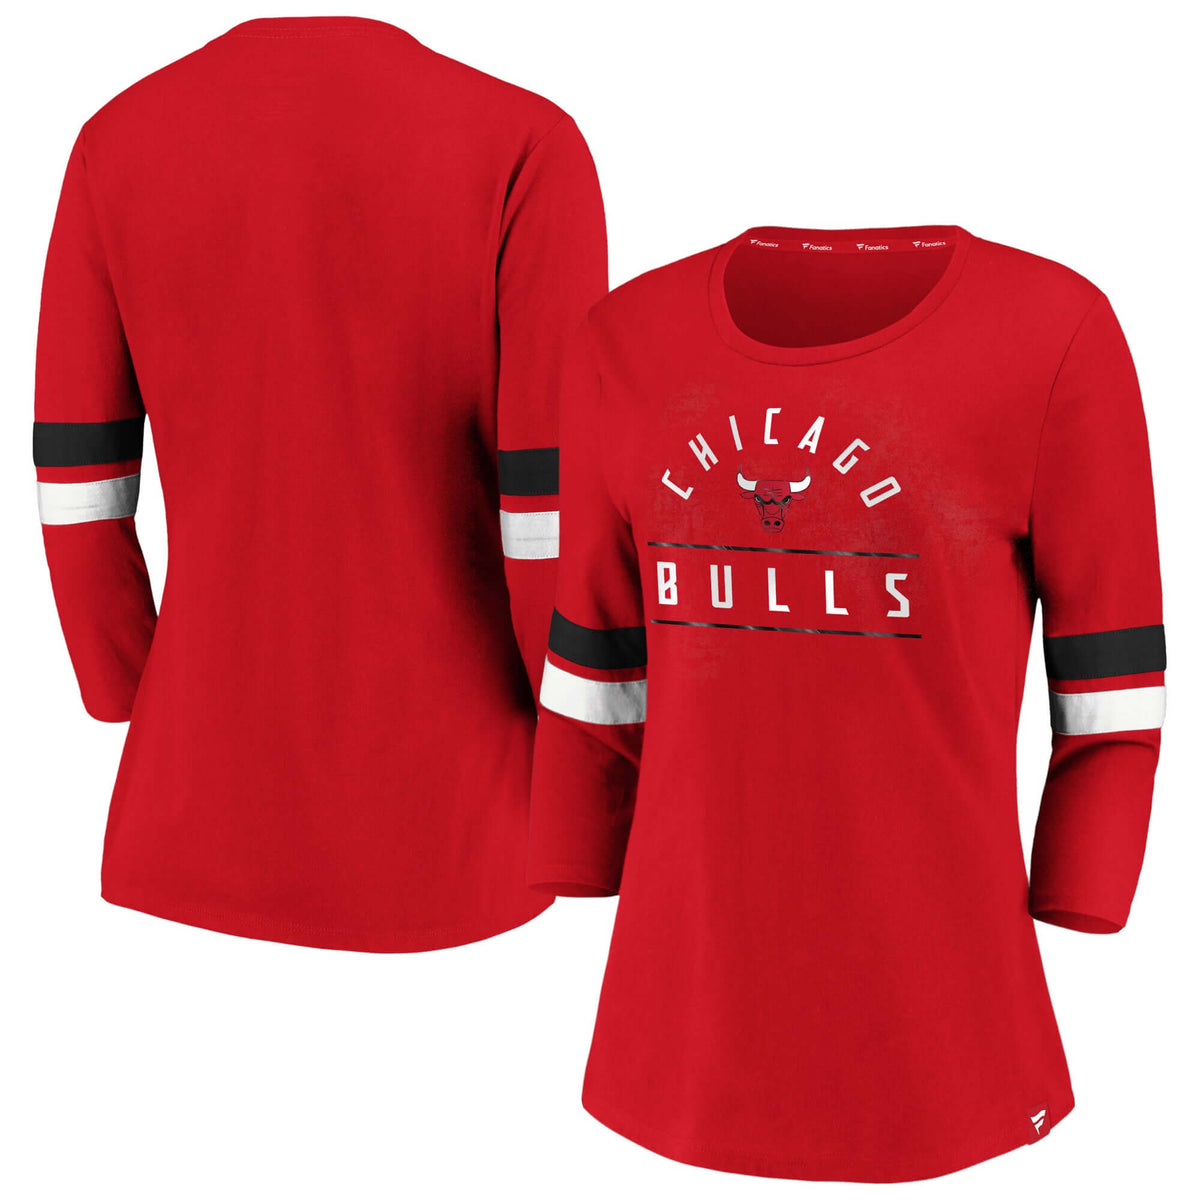 Adidas Chicago Bulls Fanatics Brand Women's Long Sleeve Flashy Tee Black/Red XXL